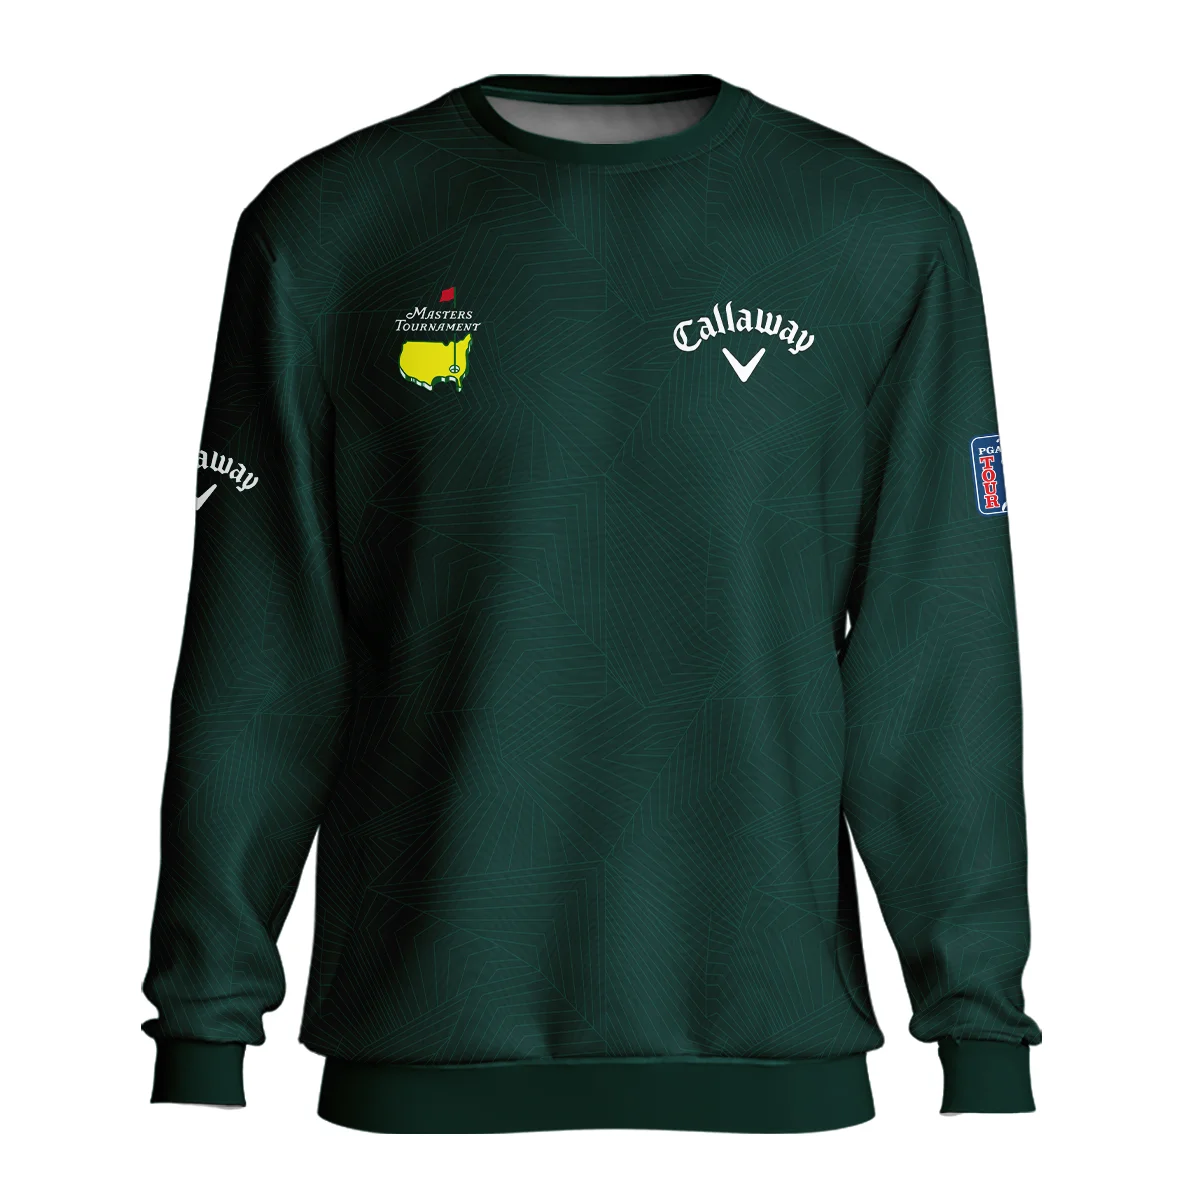 Masters Tournament Callaway Pattern Sport Jersey Dark Green Vneck Long Polo Shirt Style Classic Long Polo Shirt For Men